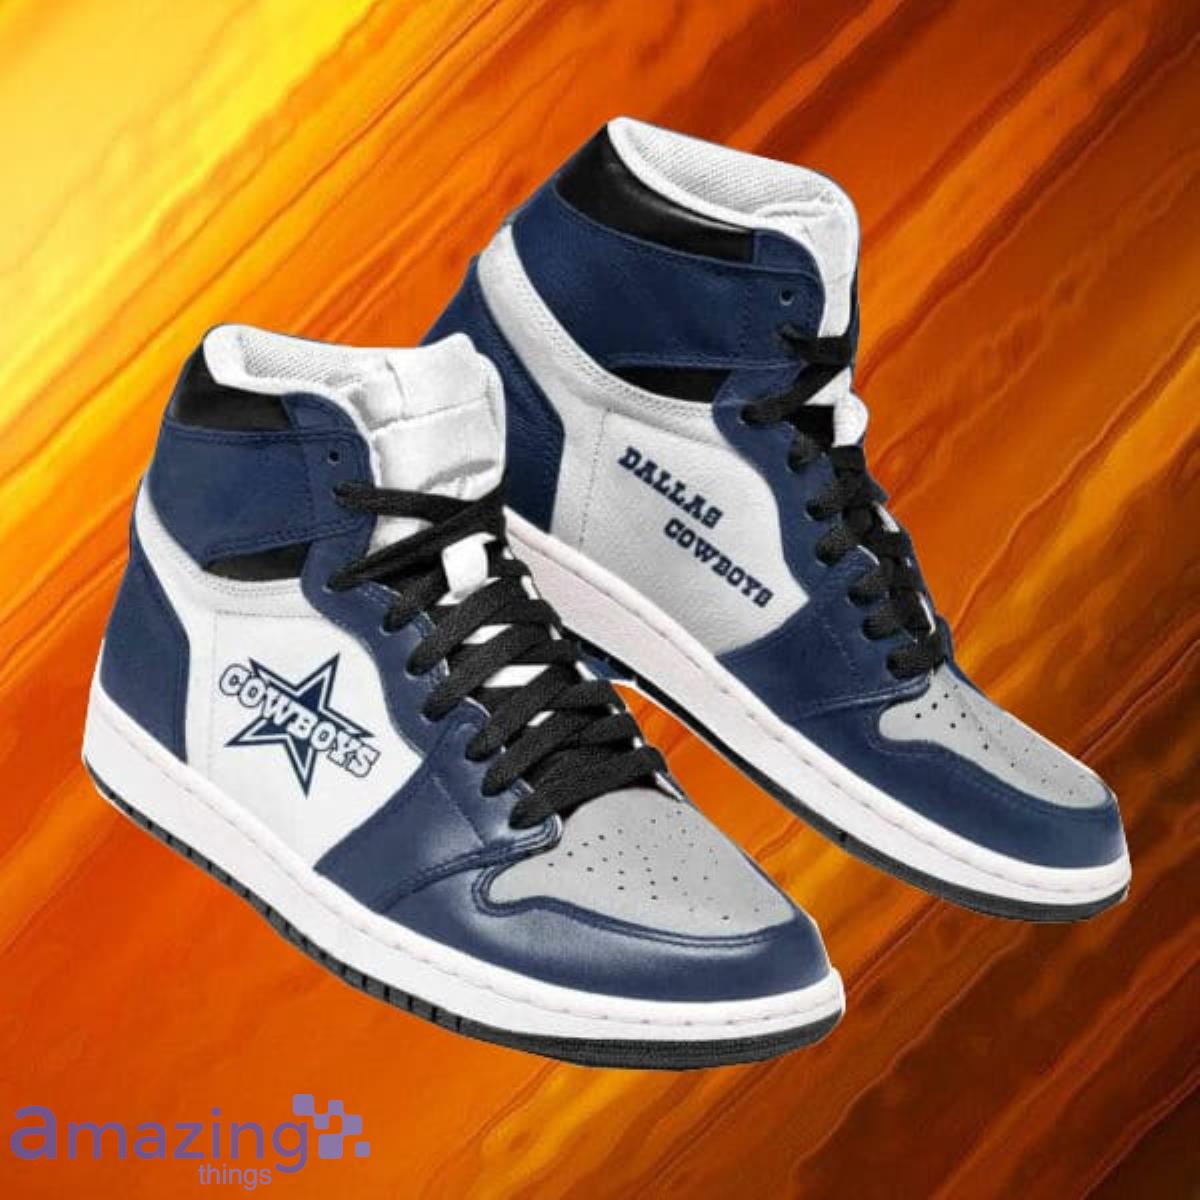 NFL Dallas Cowboy Special Limited Edition Air Jordan Hightop Shoes